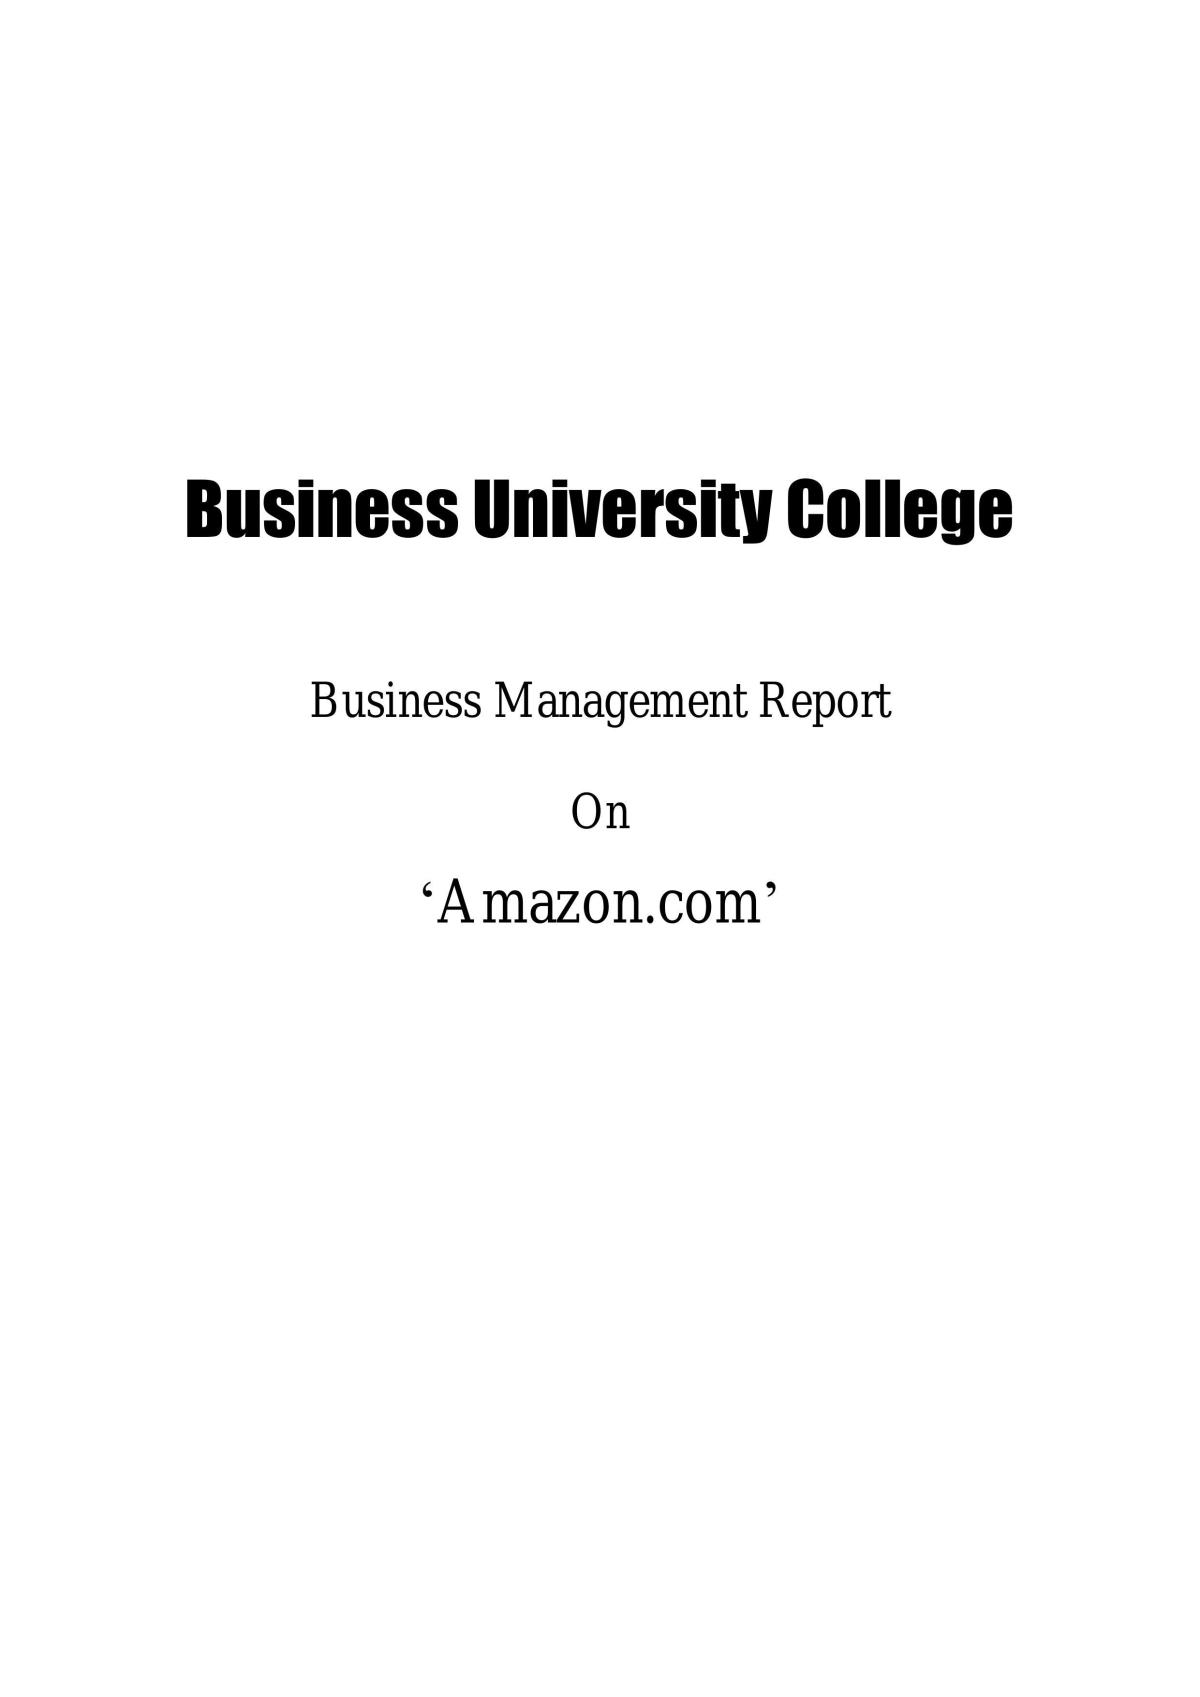 Business Management Assignment - AMAZON.COM - Page 1